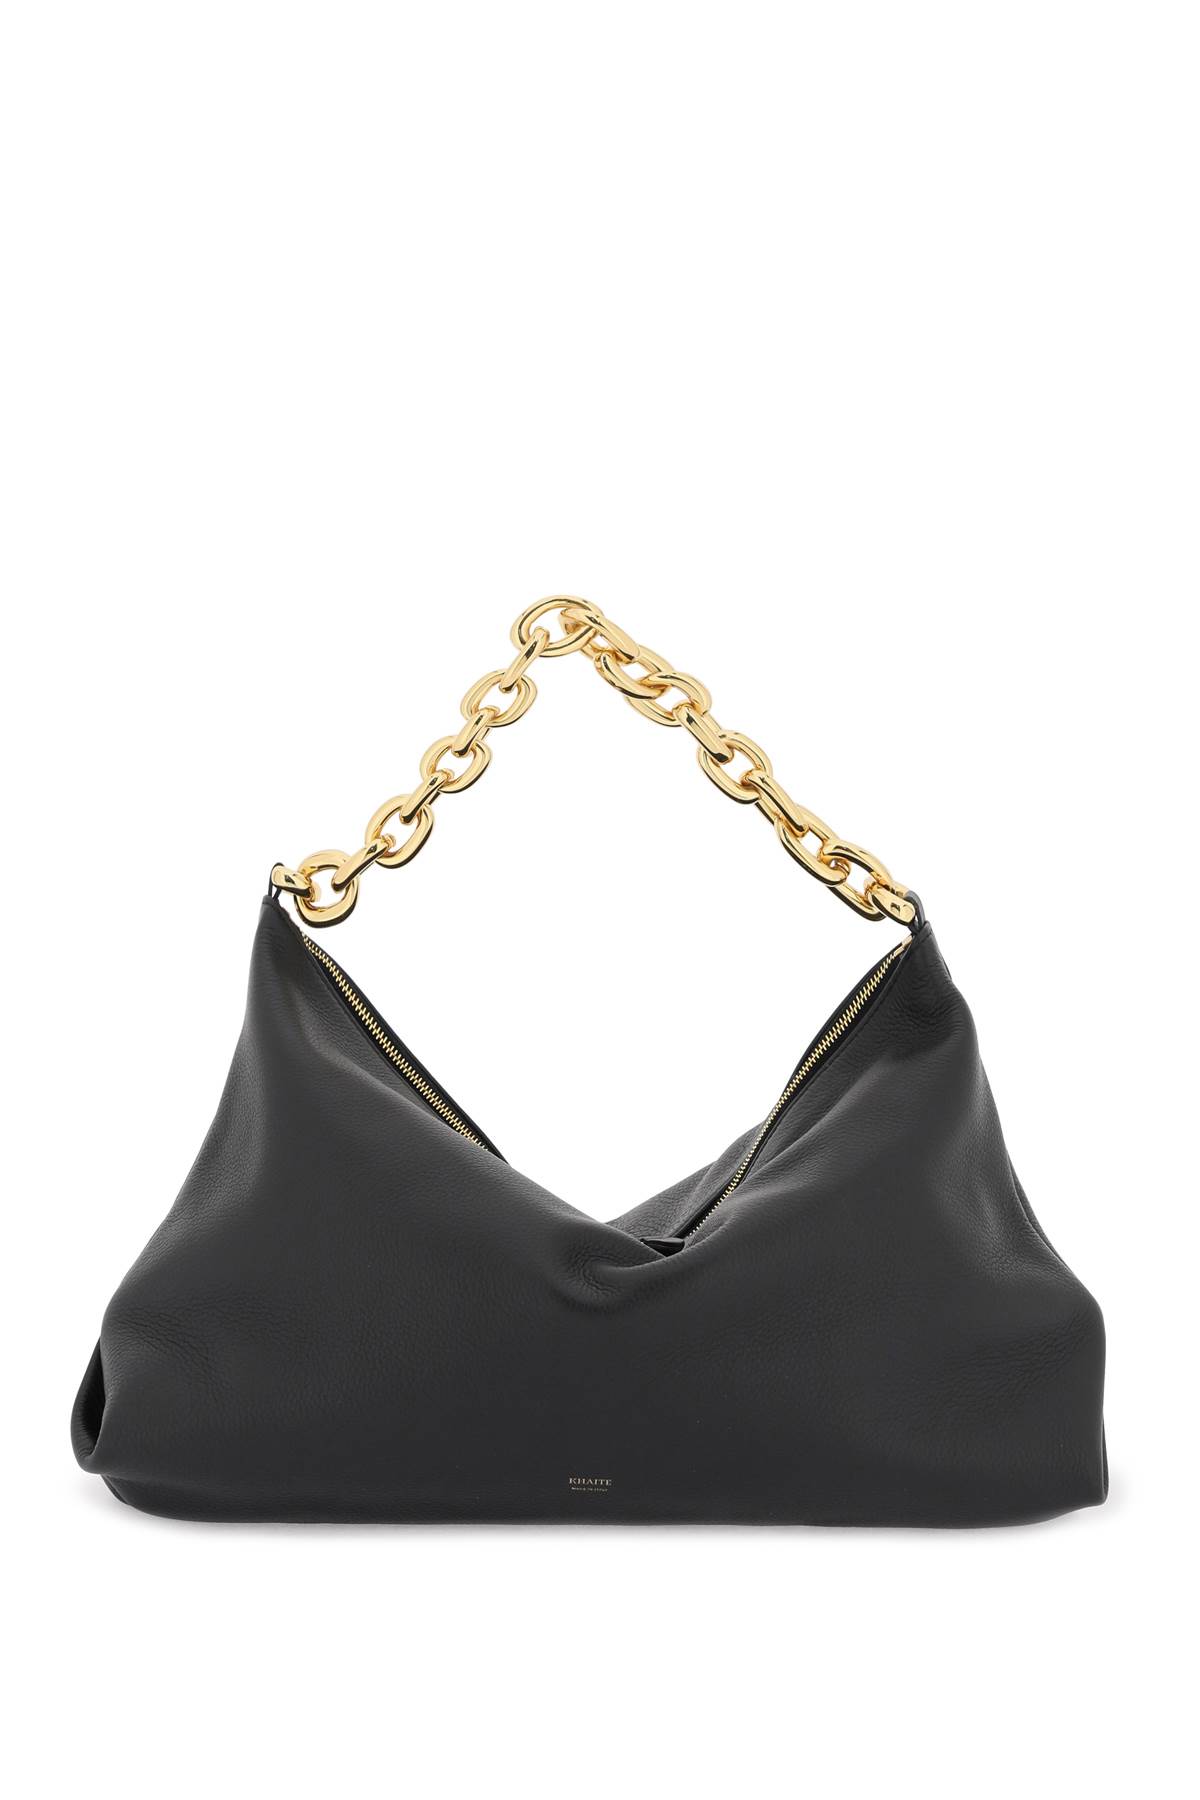 Clara Black Leather Bag